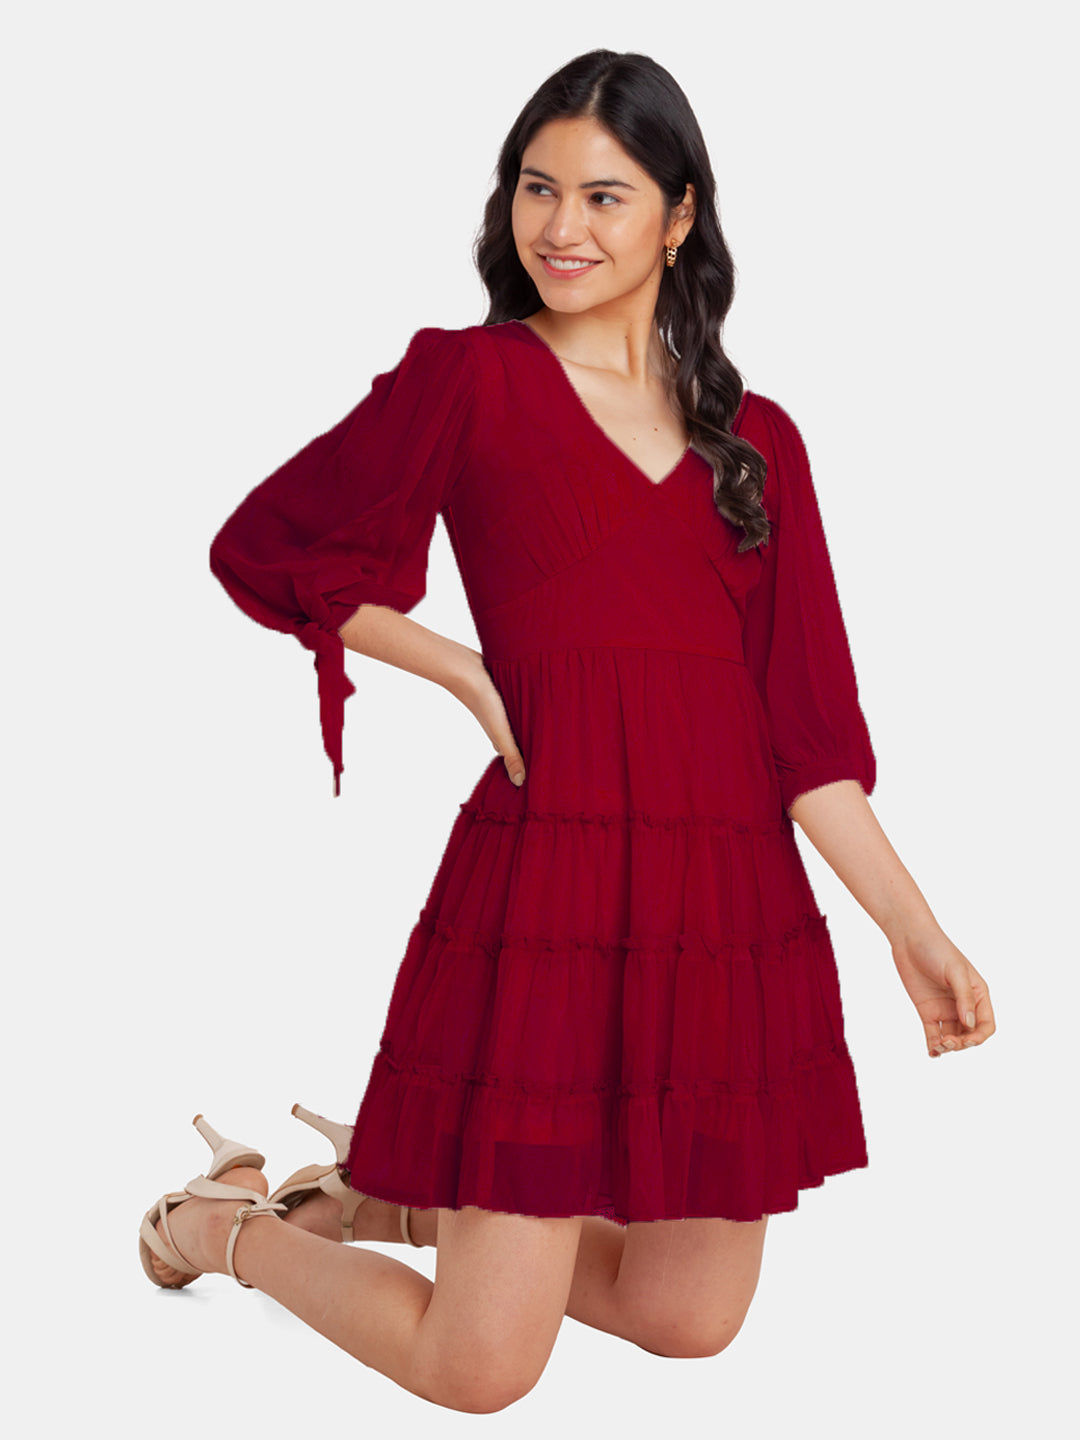 Crimson-Red-Solid-Fit-and-Flare-Short-Dress-VD02165_227-CrimsonRed-5